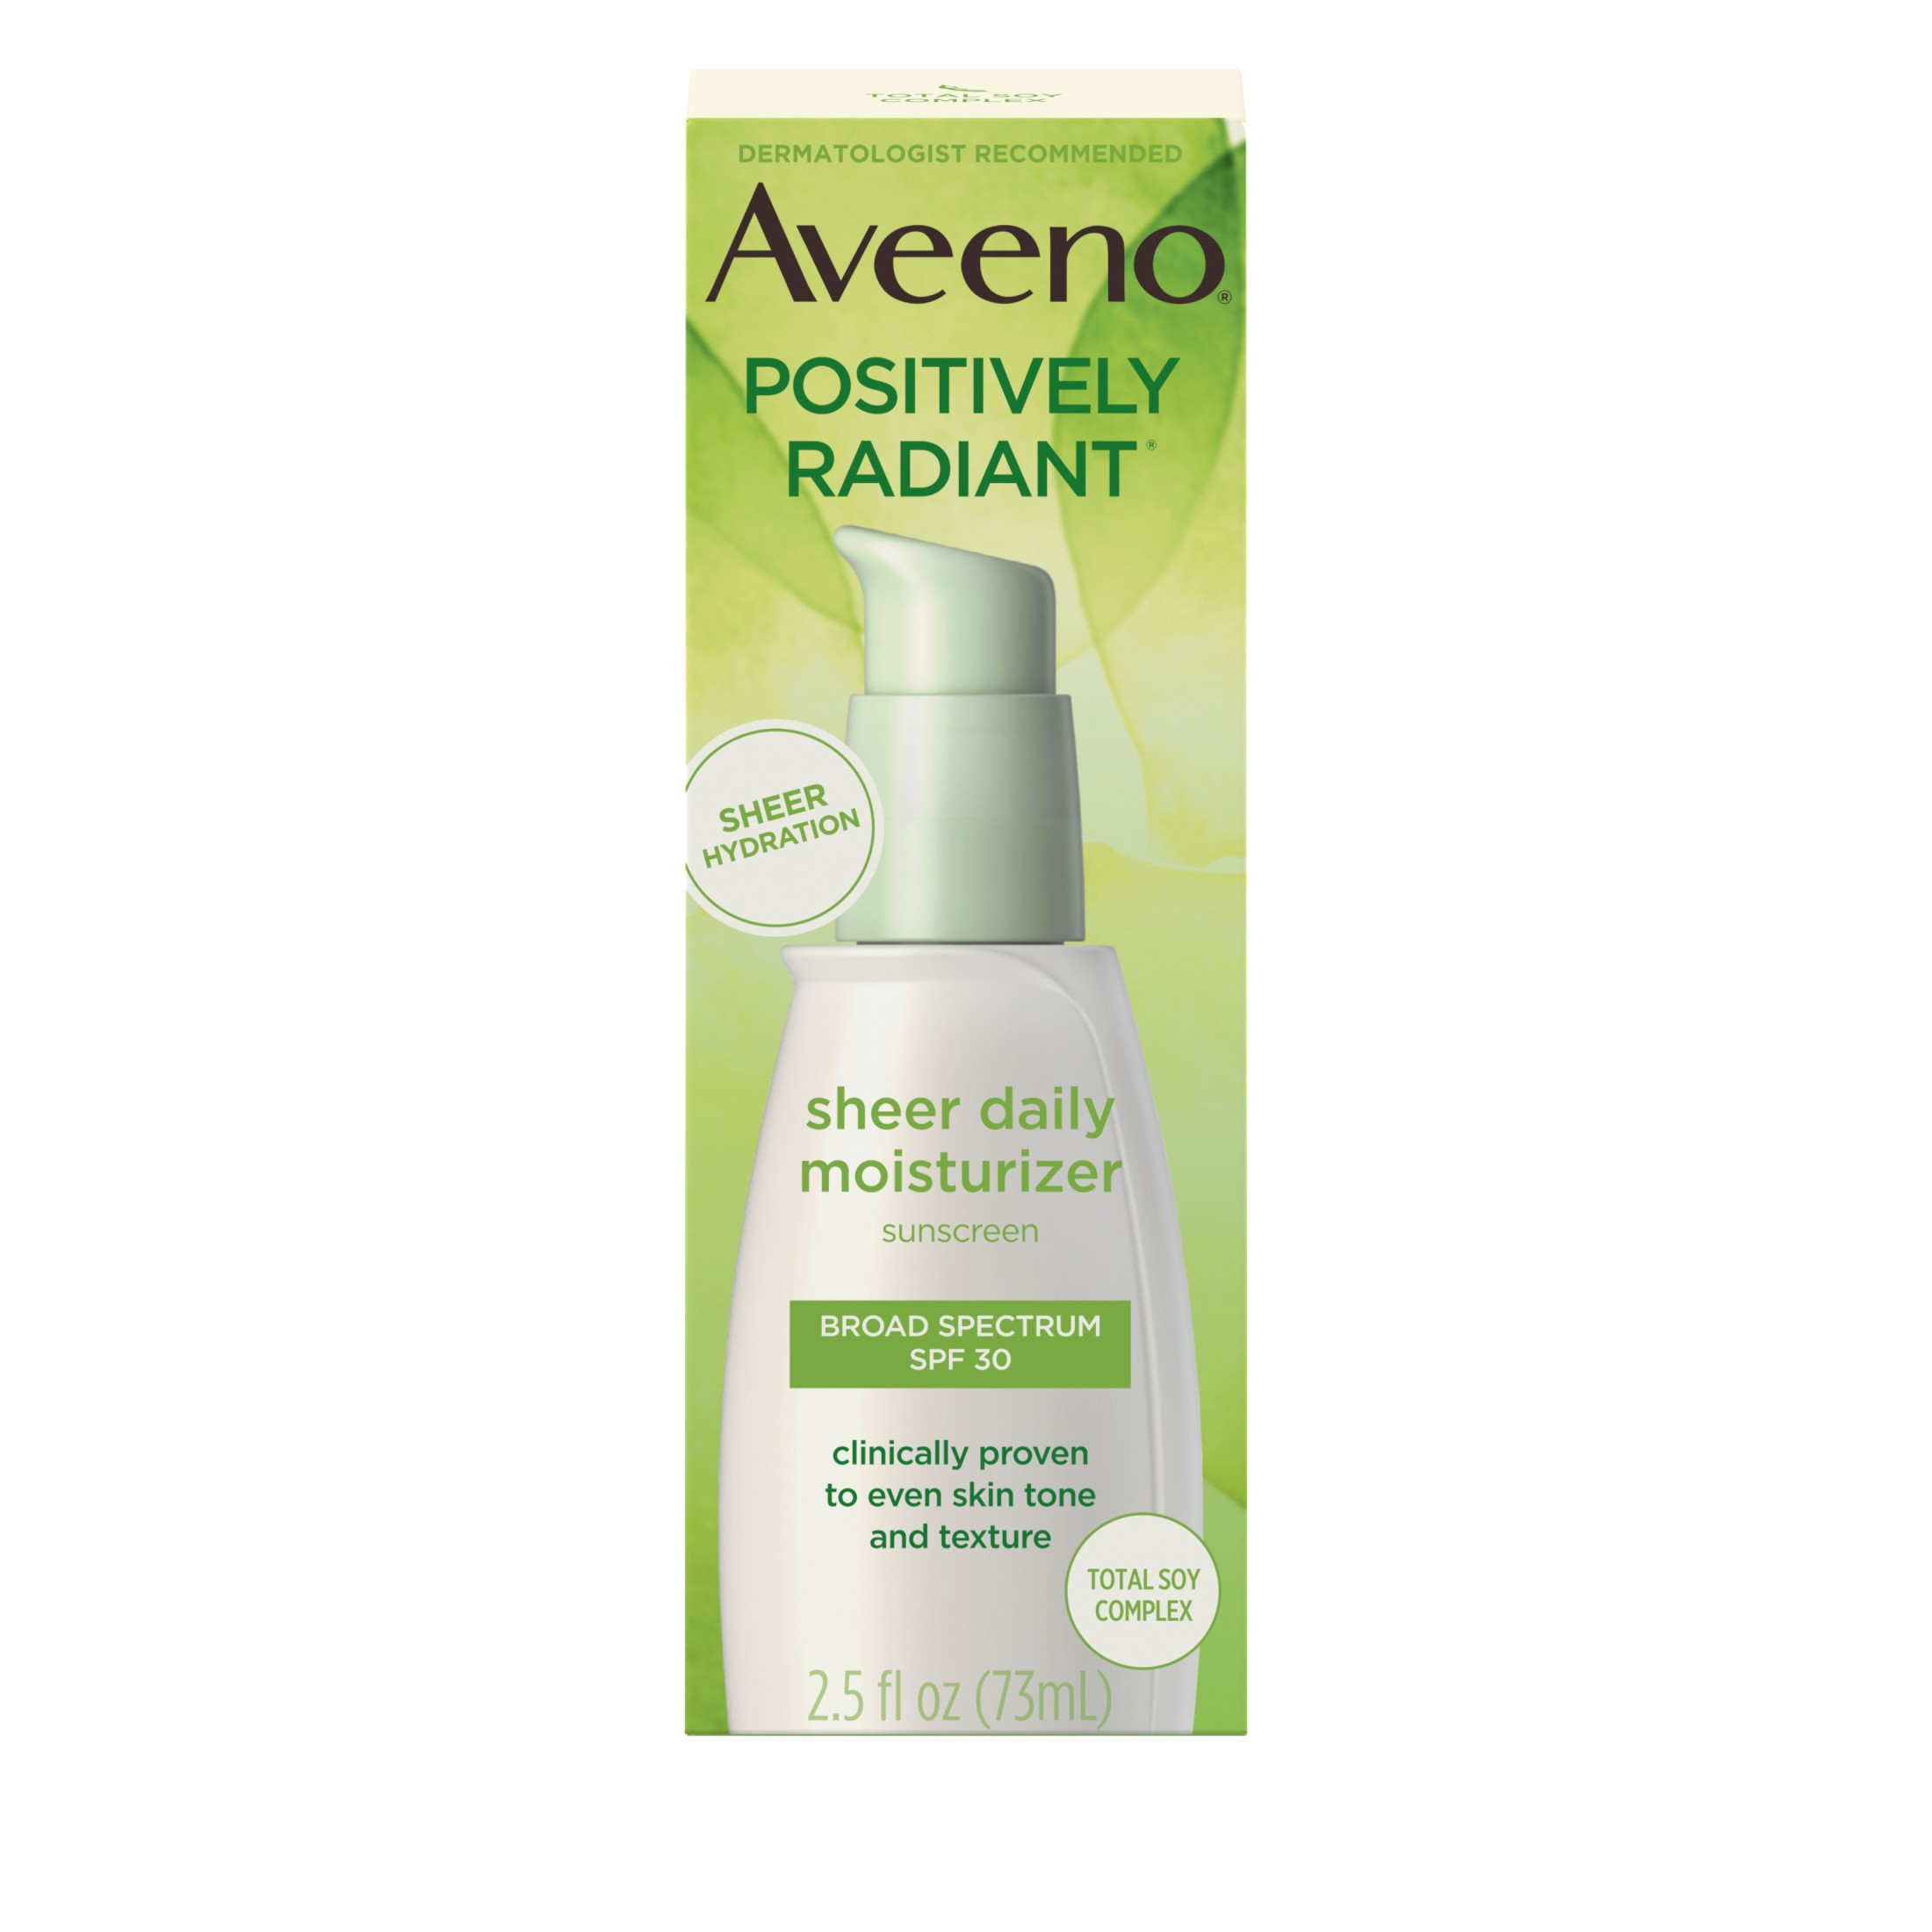 Aveeno Positively Radiant Sheer Daily Moisturizer SPF 30, 2.5 fl. oz - image 1 of 11